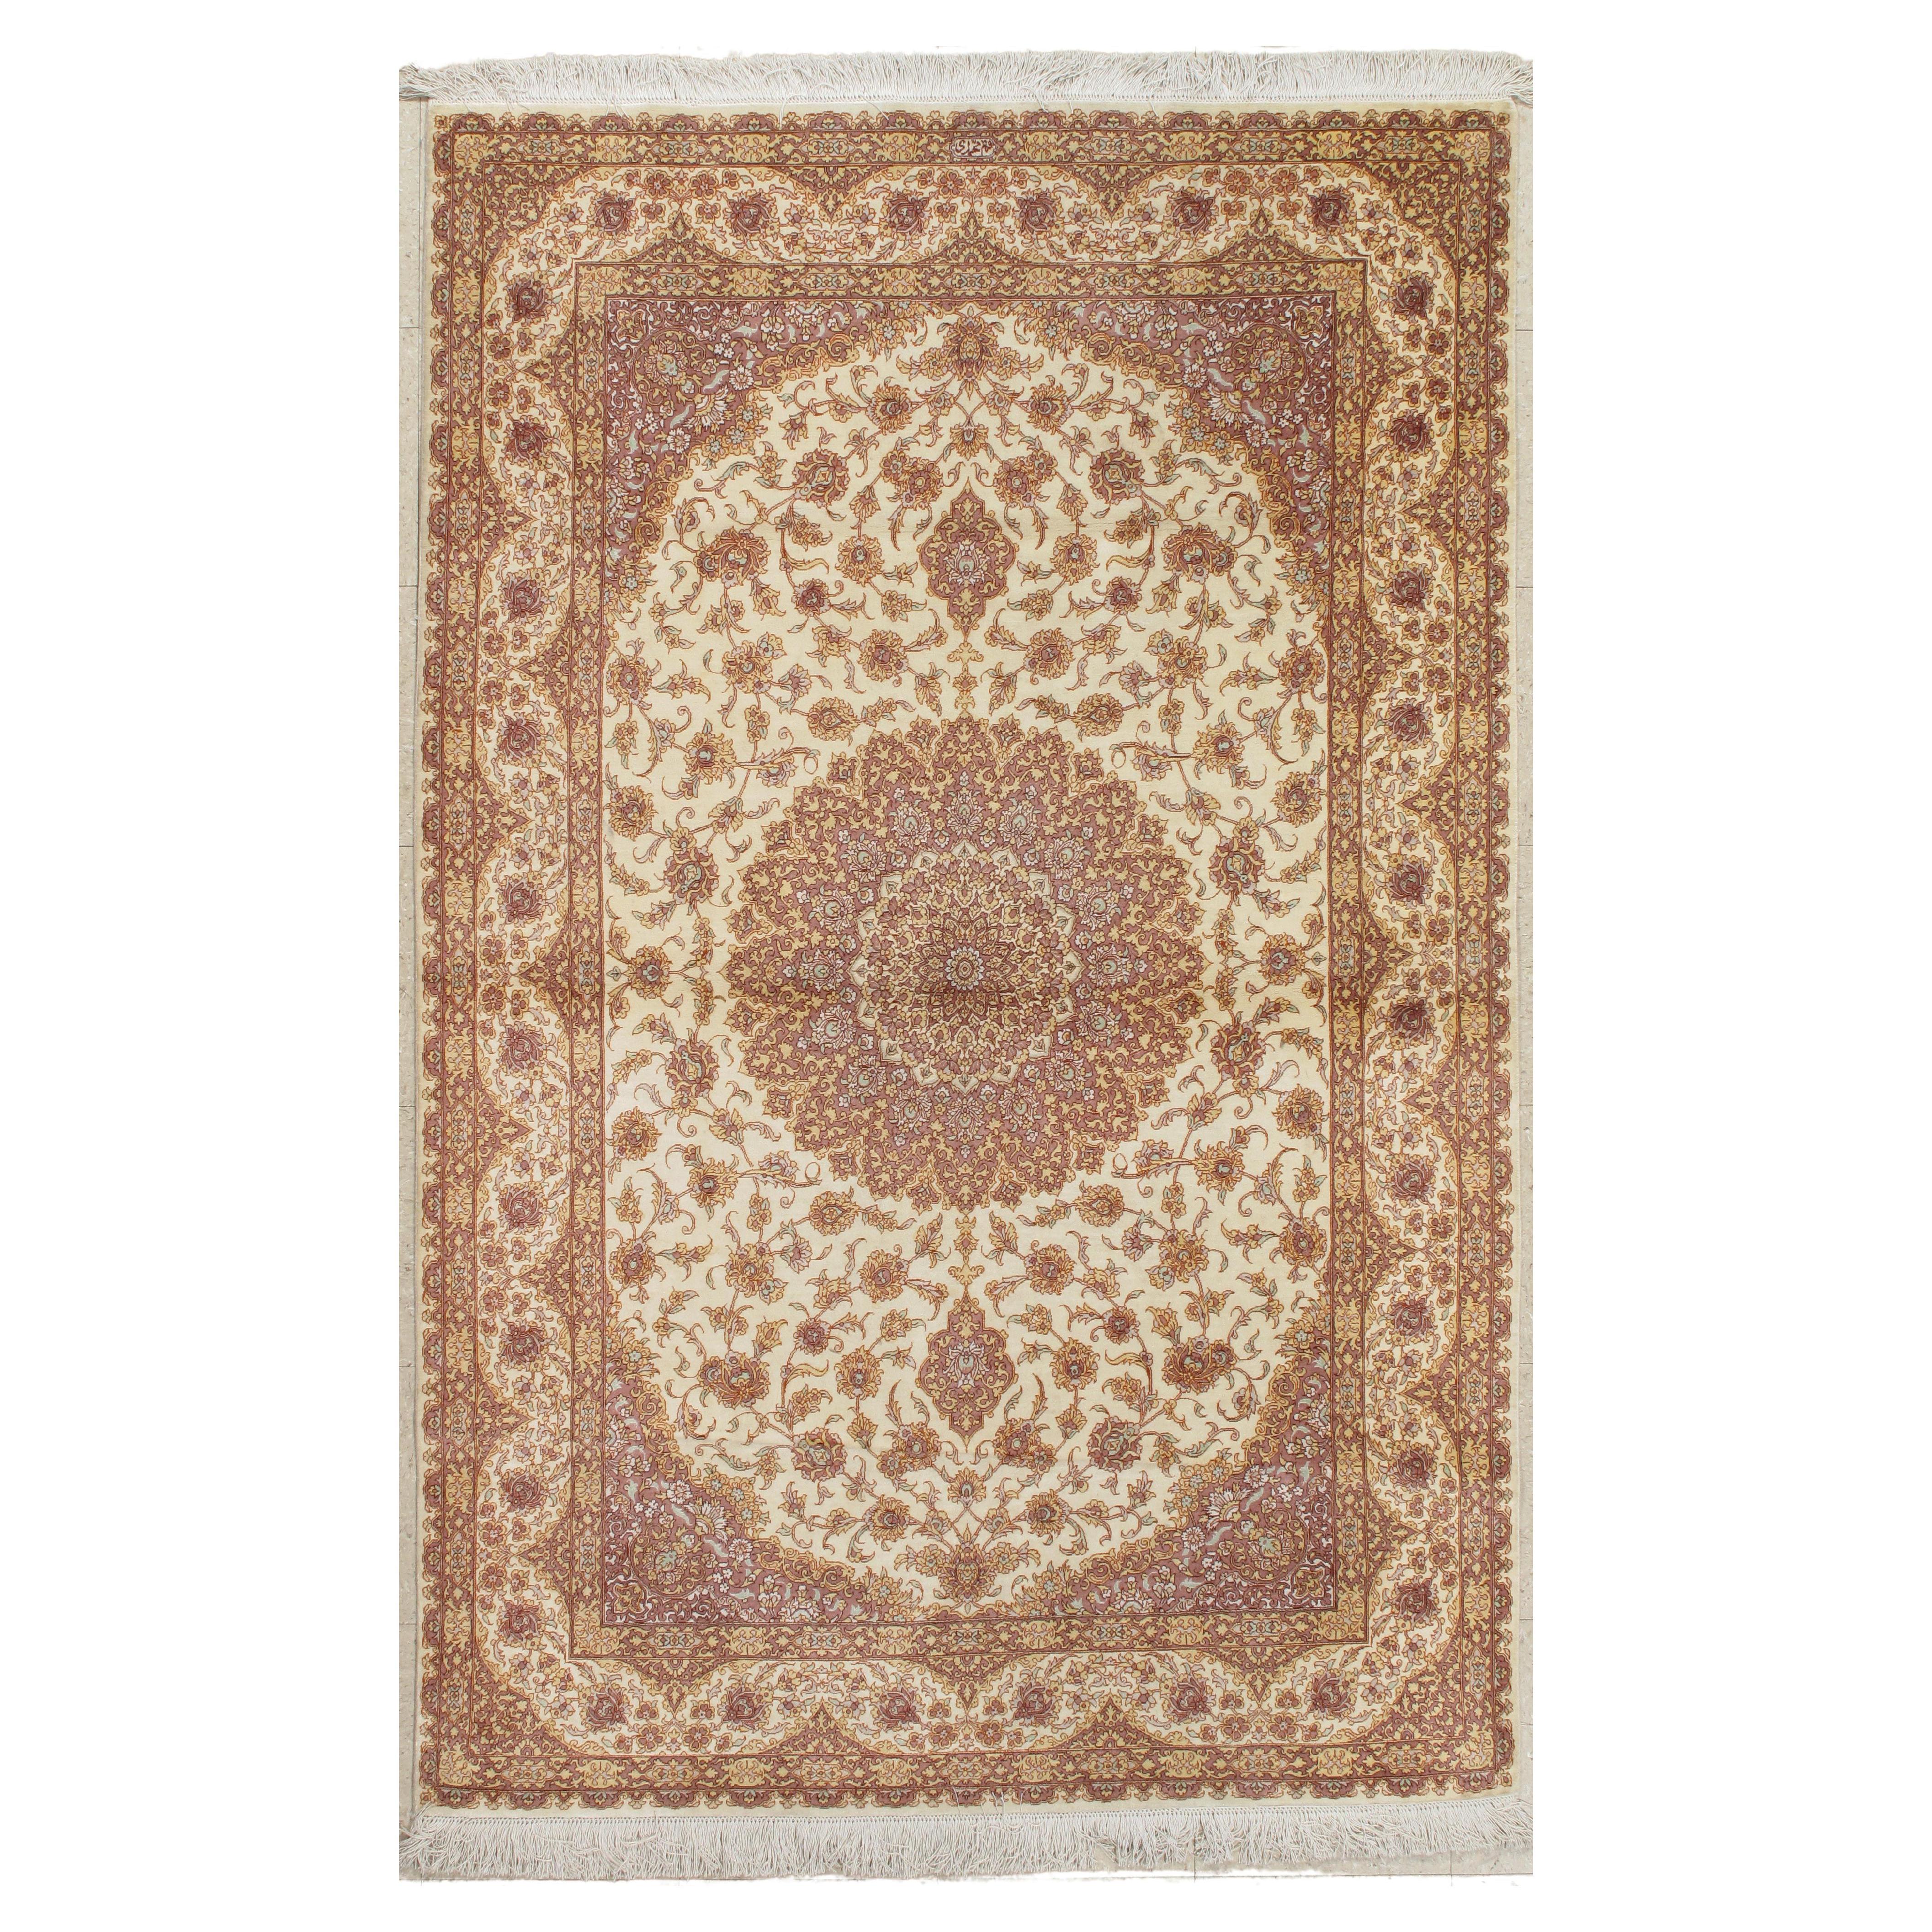 Rare Finely Woven Persian Silk Qum, Handmade Oriental Rug, Soft Ivory